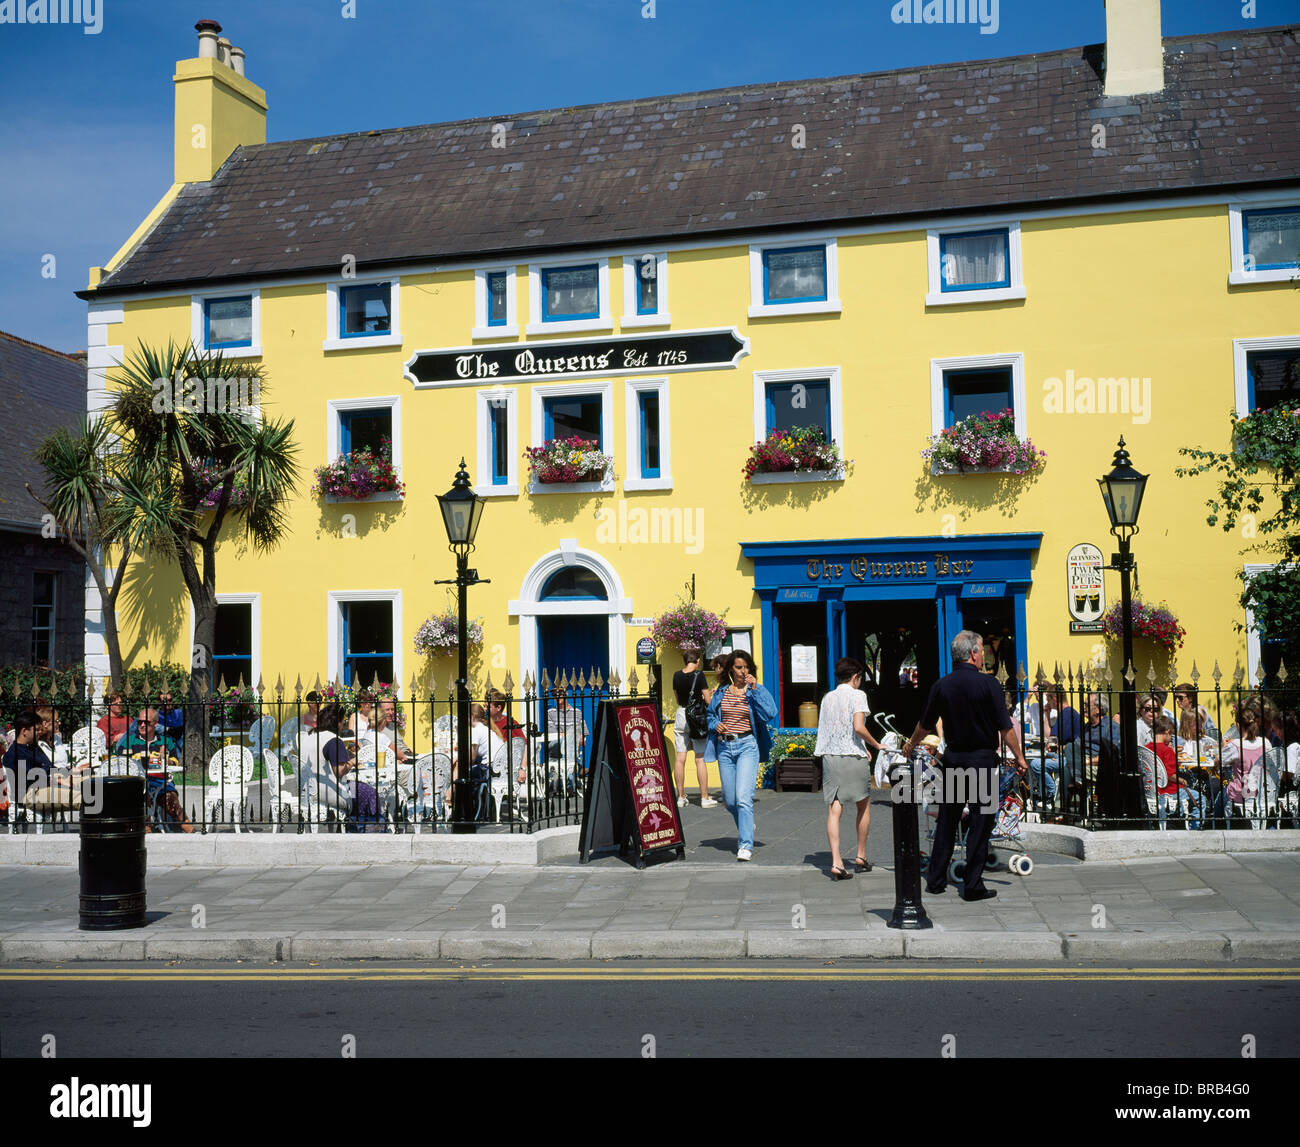 Dublin Pub, The Queens, Dalkey, Stock Photo